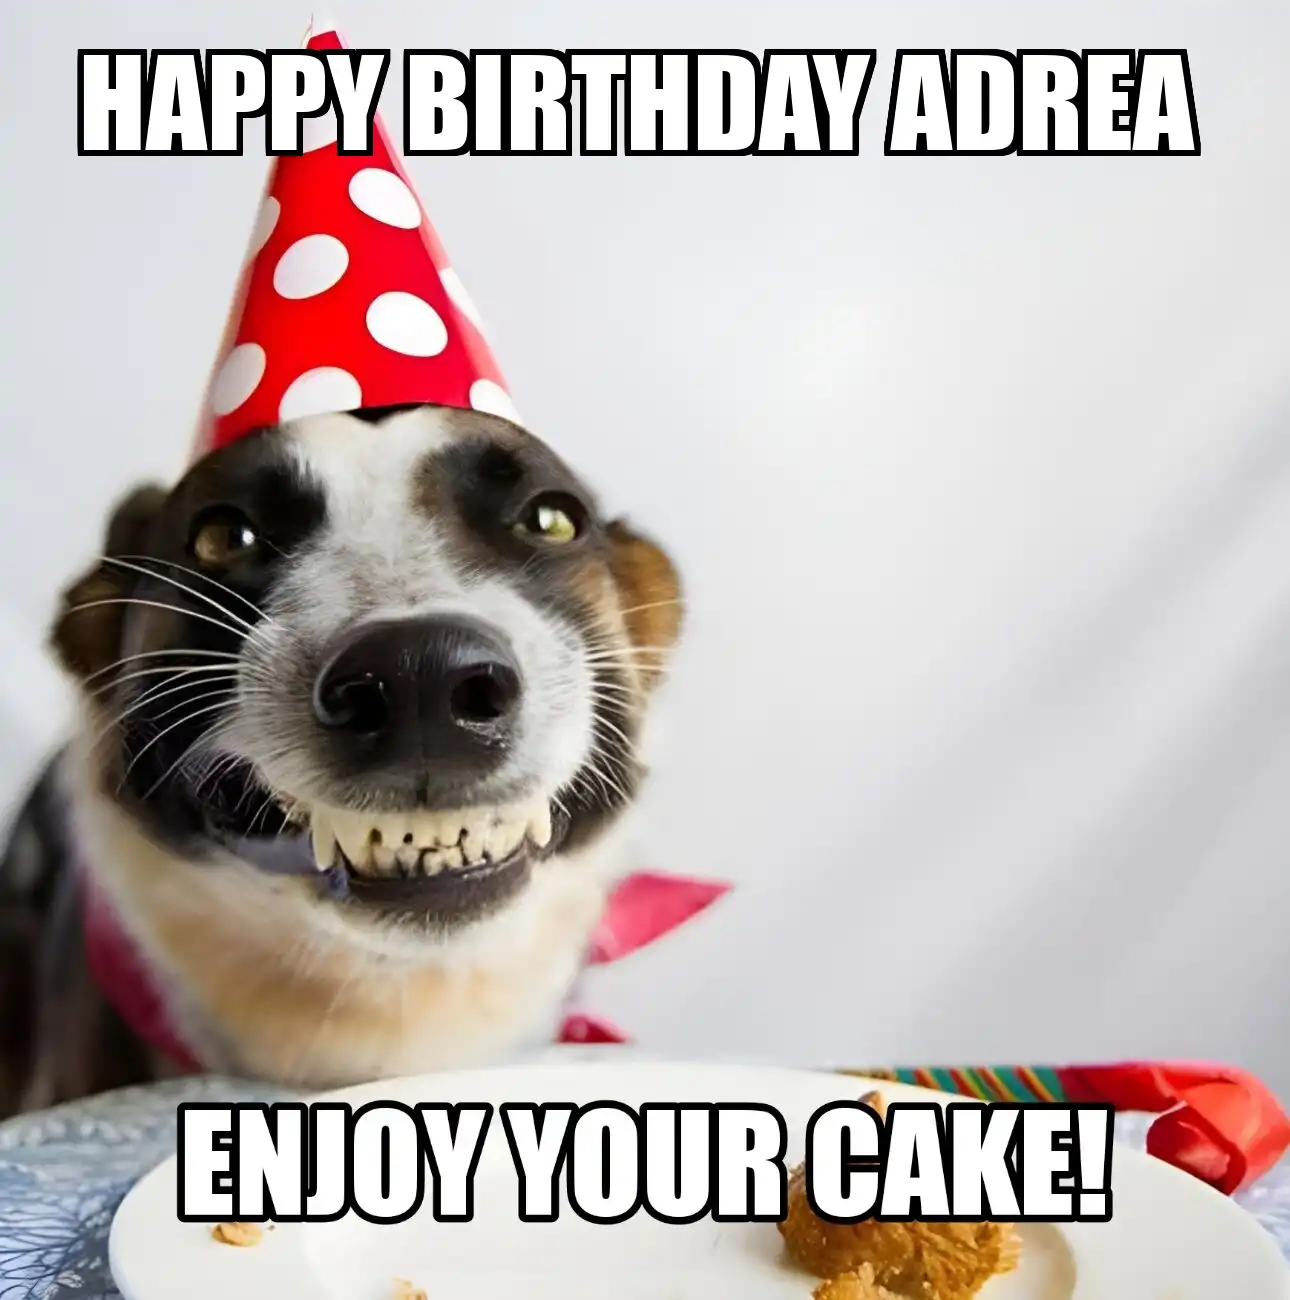 Happy Birthday Adrea Enjoy Your Cake Dog Meme